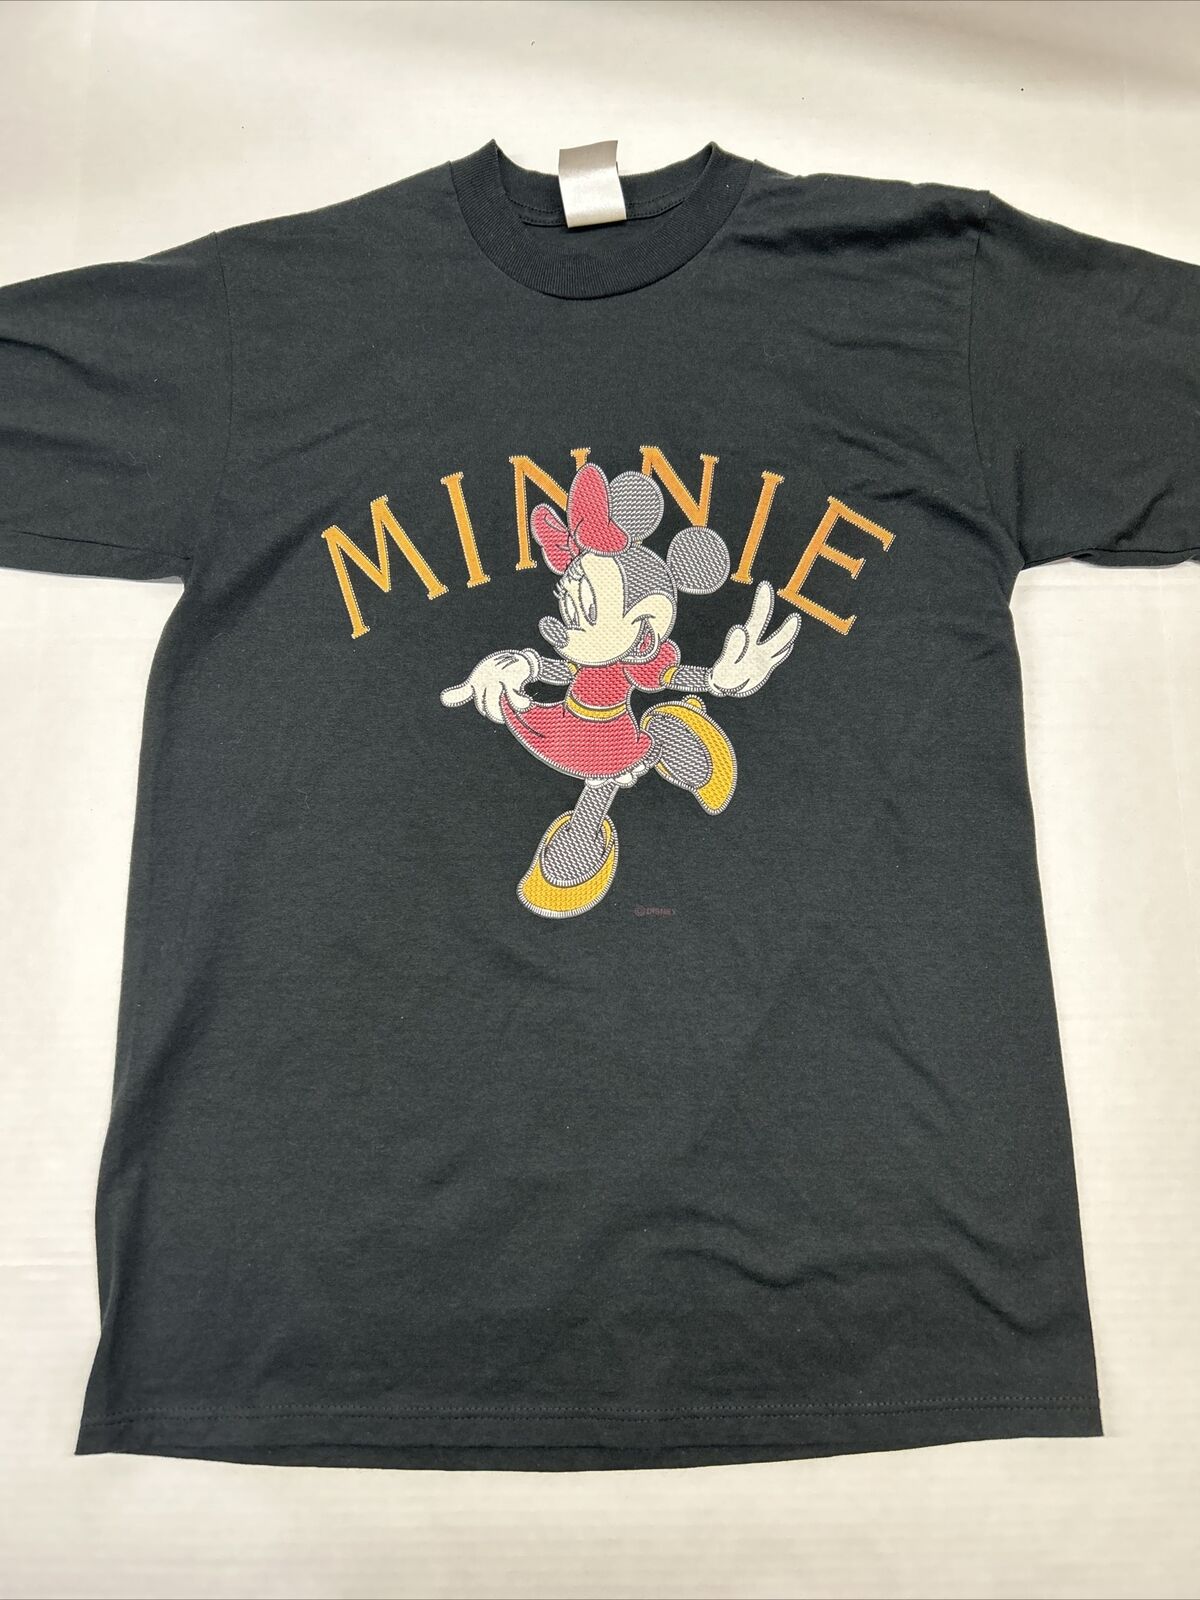 Vintage 90’s Disney Minnie Mouse Raised Texture Patterned Print Shirt Medium Blk